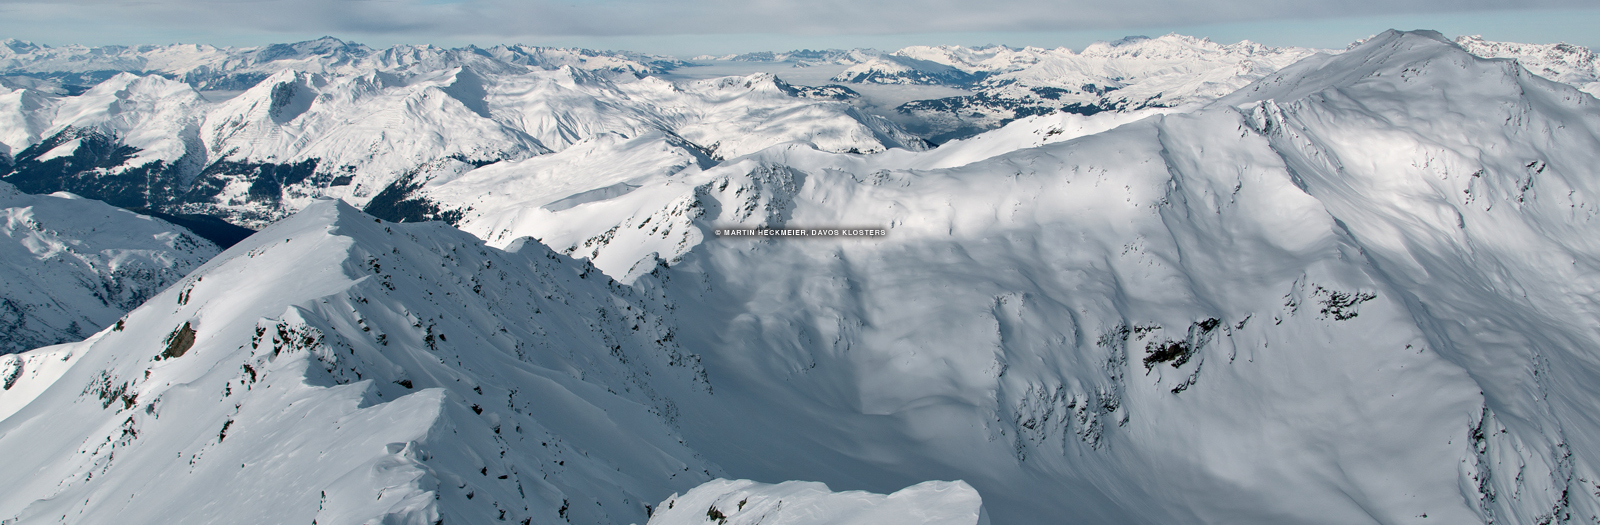 Davos, Switzerland vacation packages, ski, snowboard